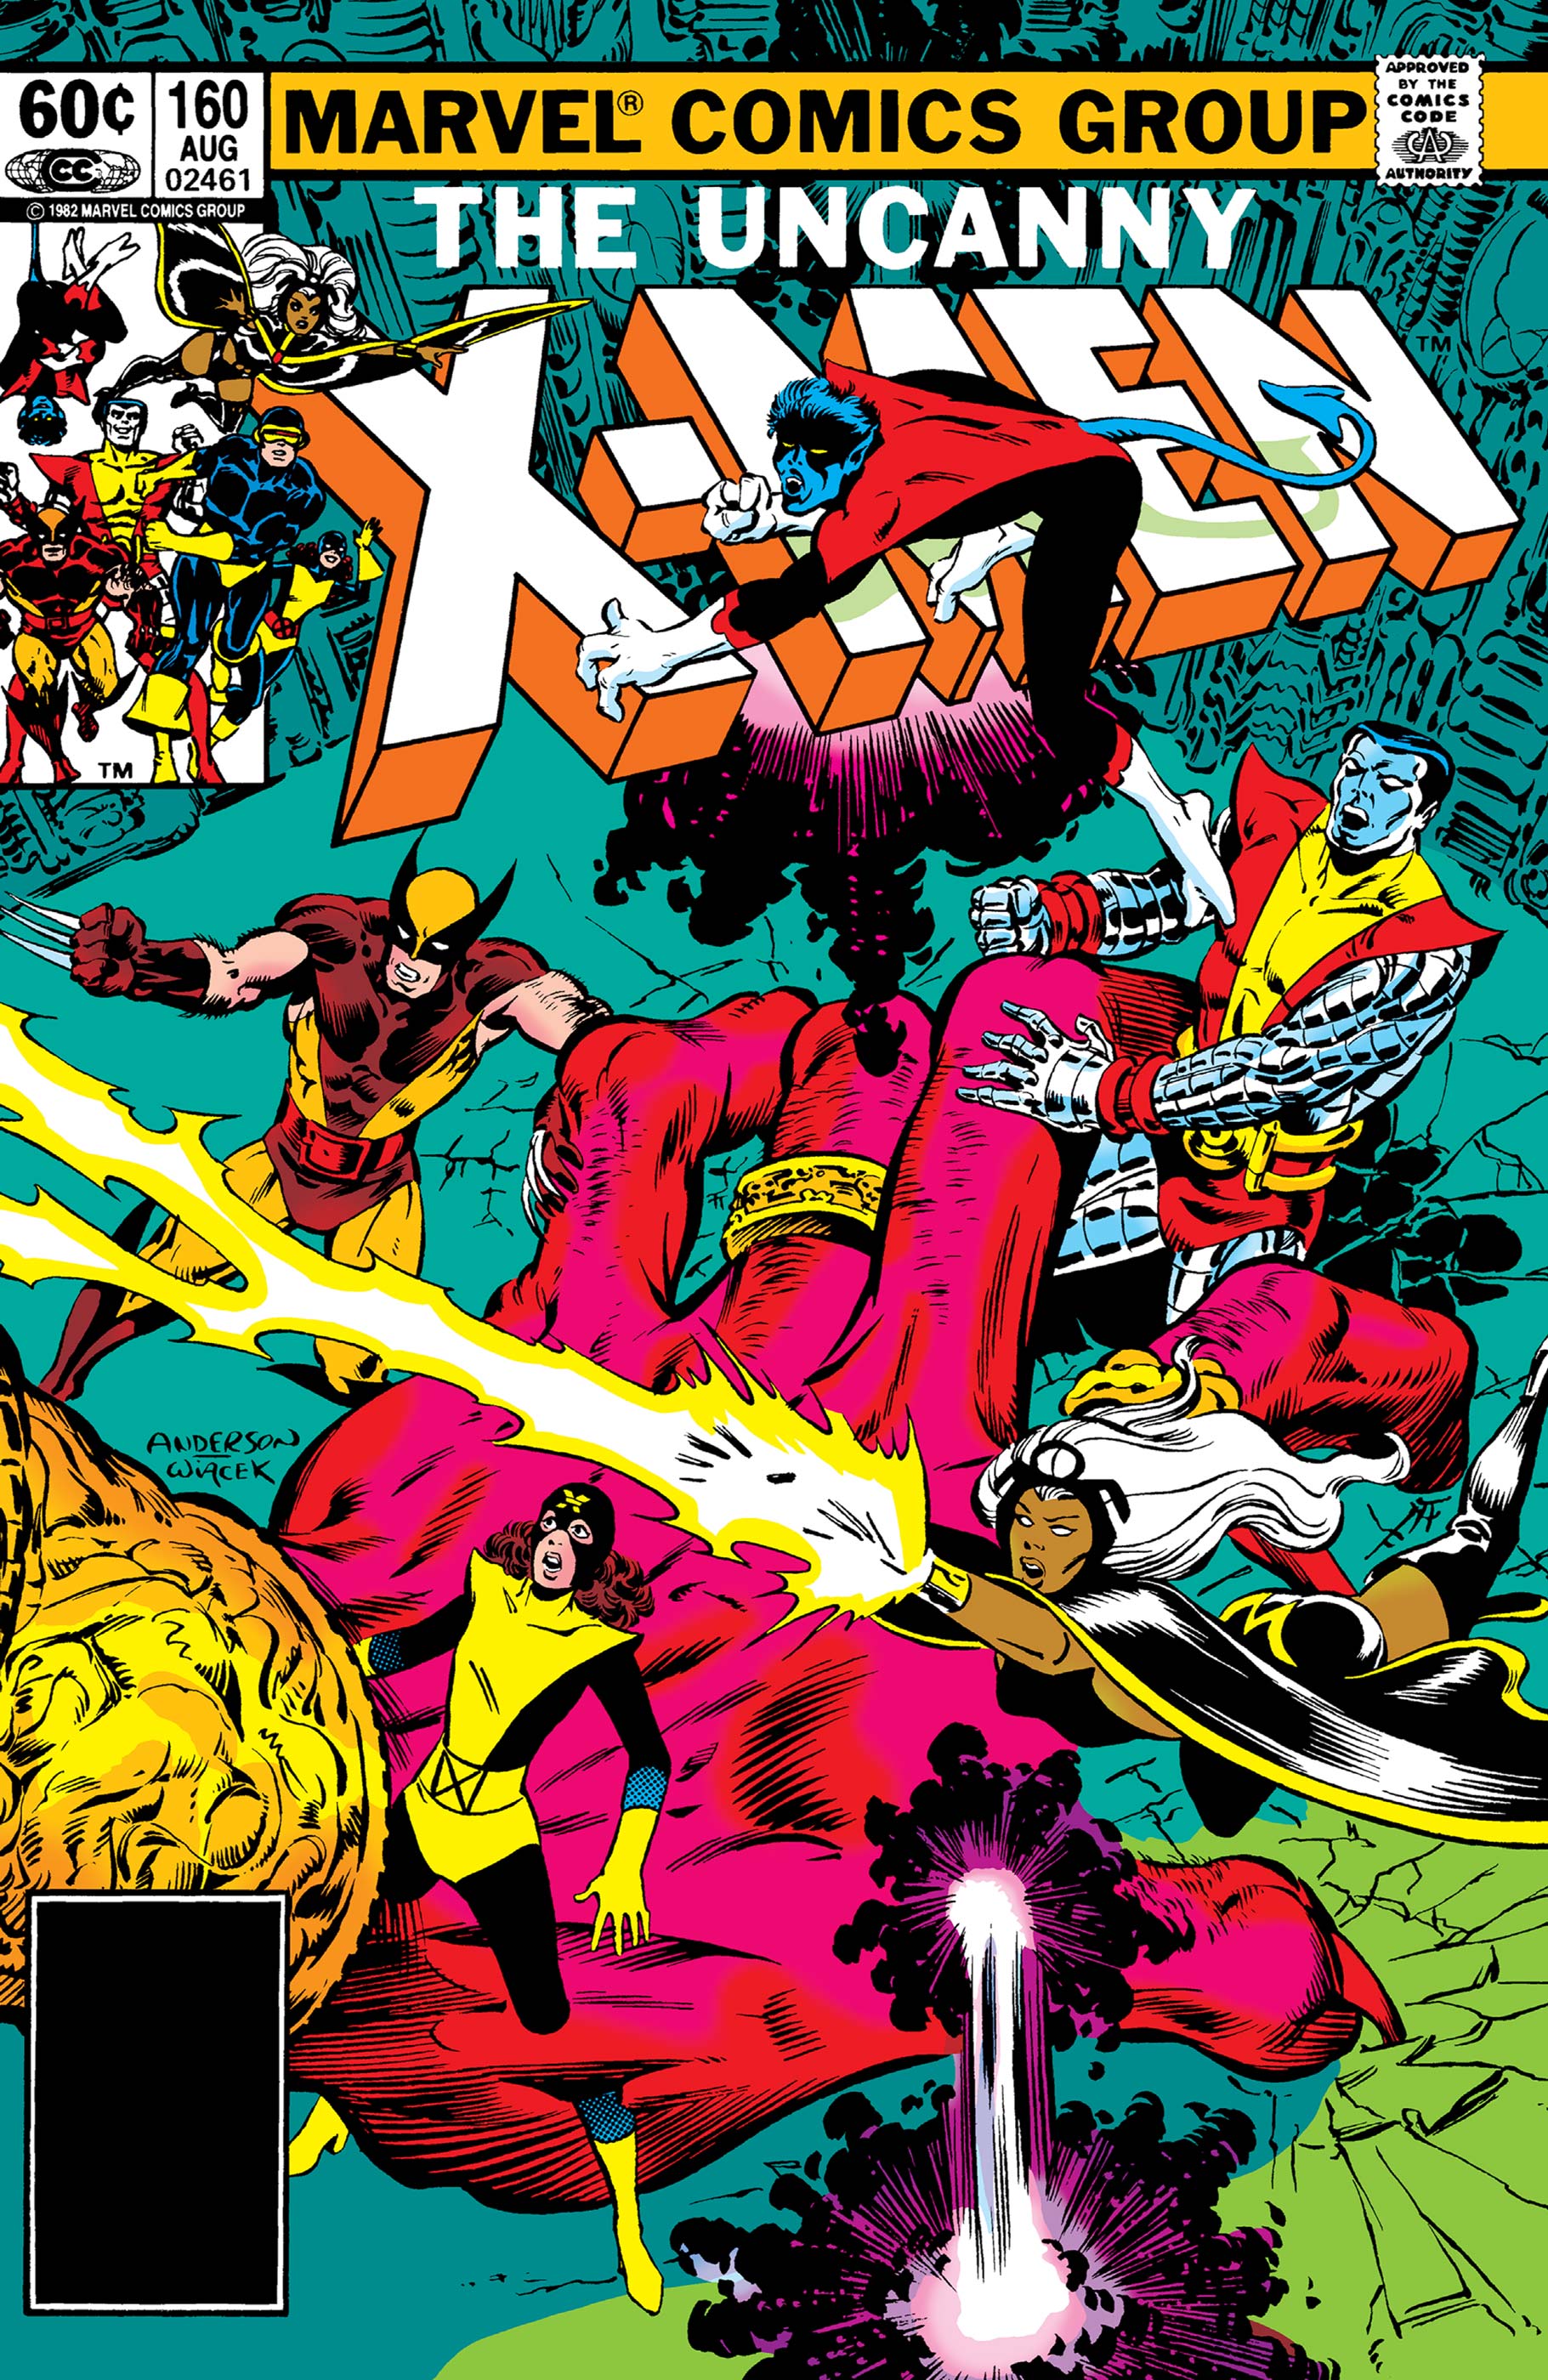 Uncanny X-Men (1981) #160